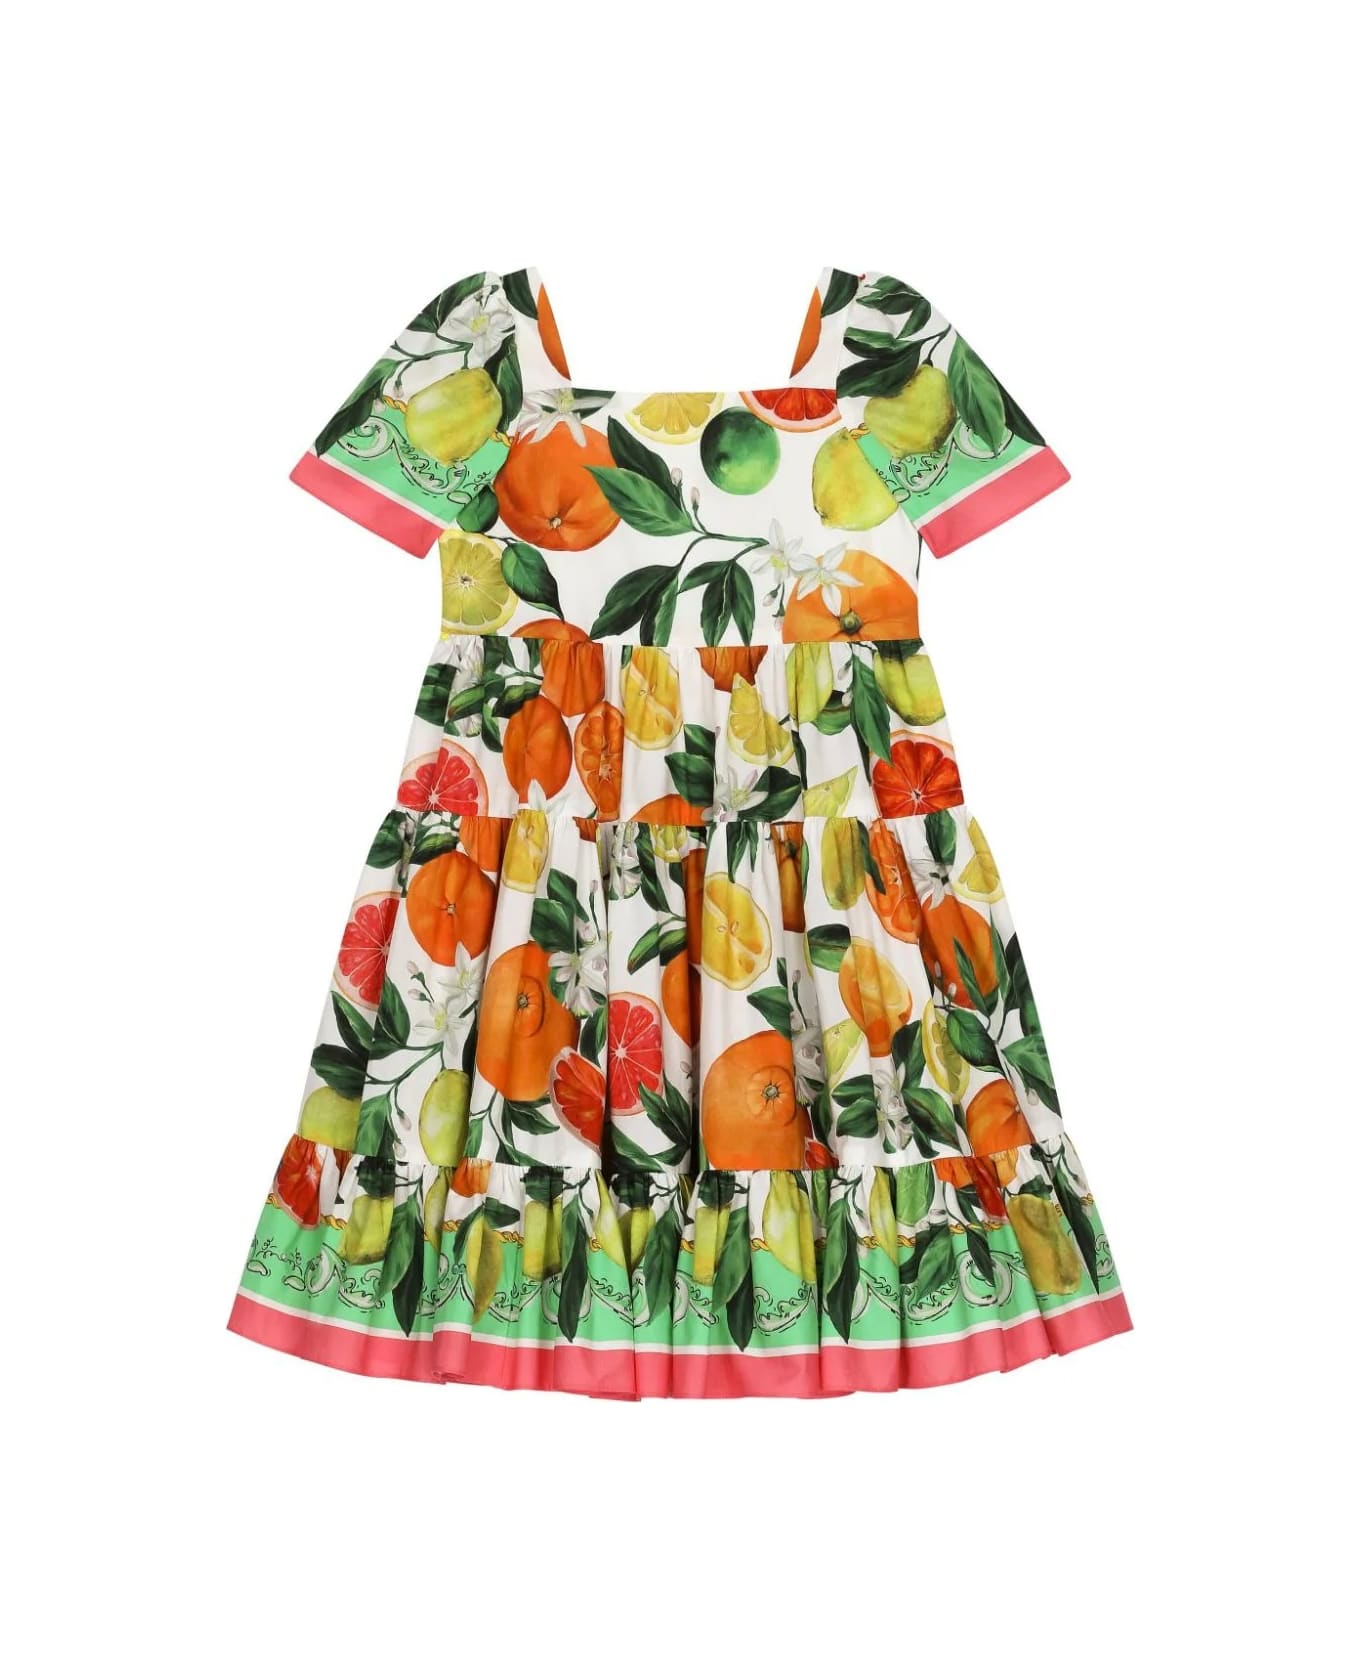 Dolce & Gabbana Multicolored Dress With Orange And Lemon Print - Multicolour